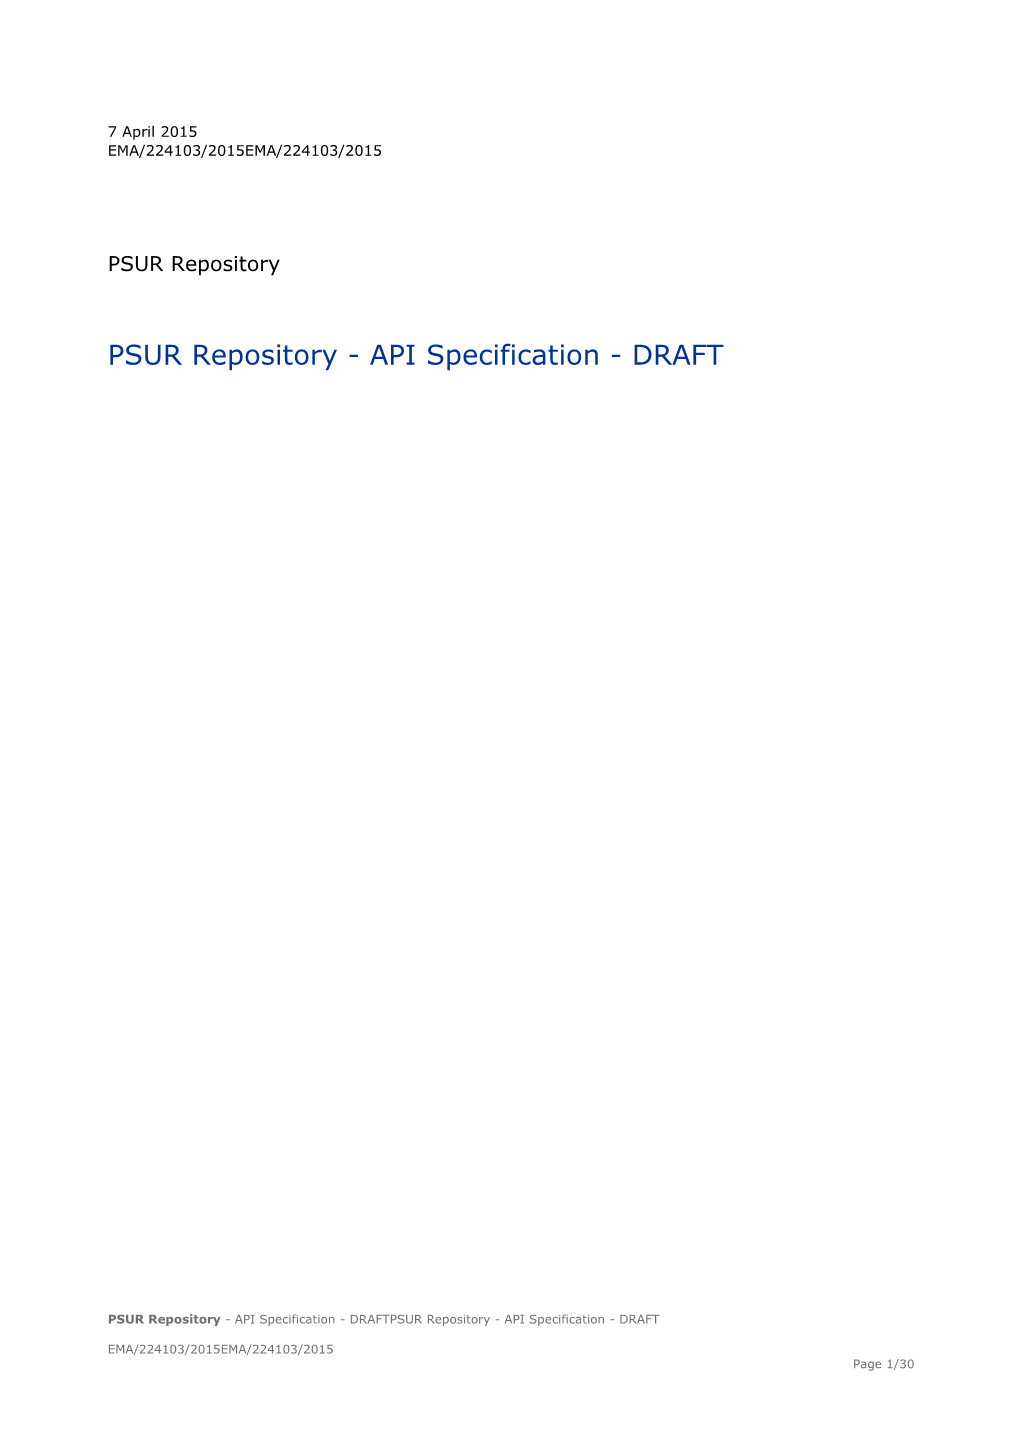 PSUR-Repository-API-Specification